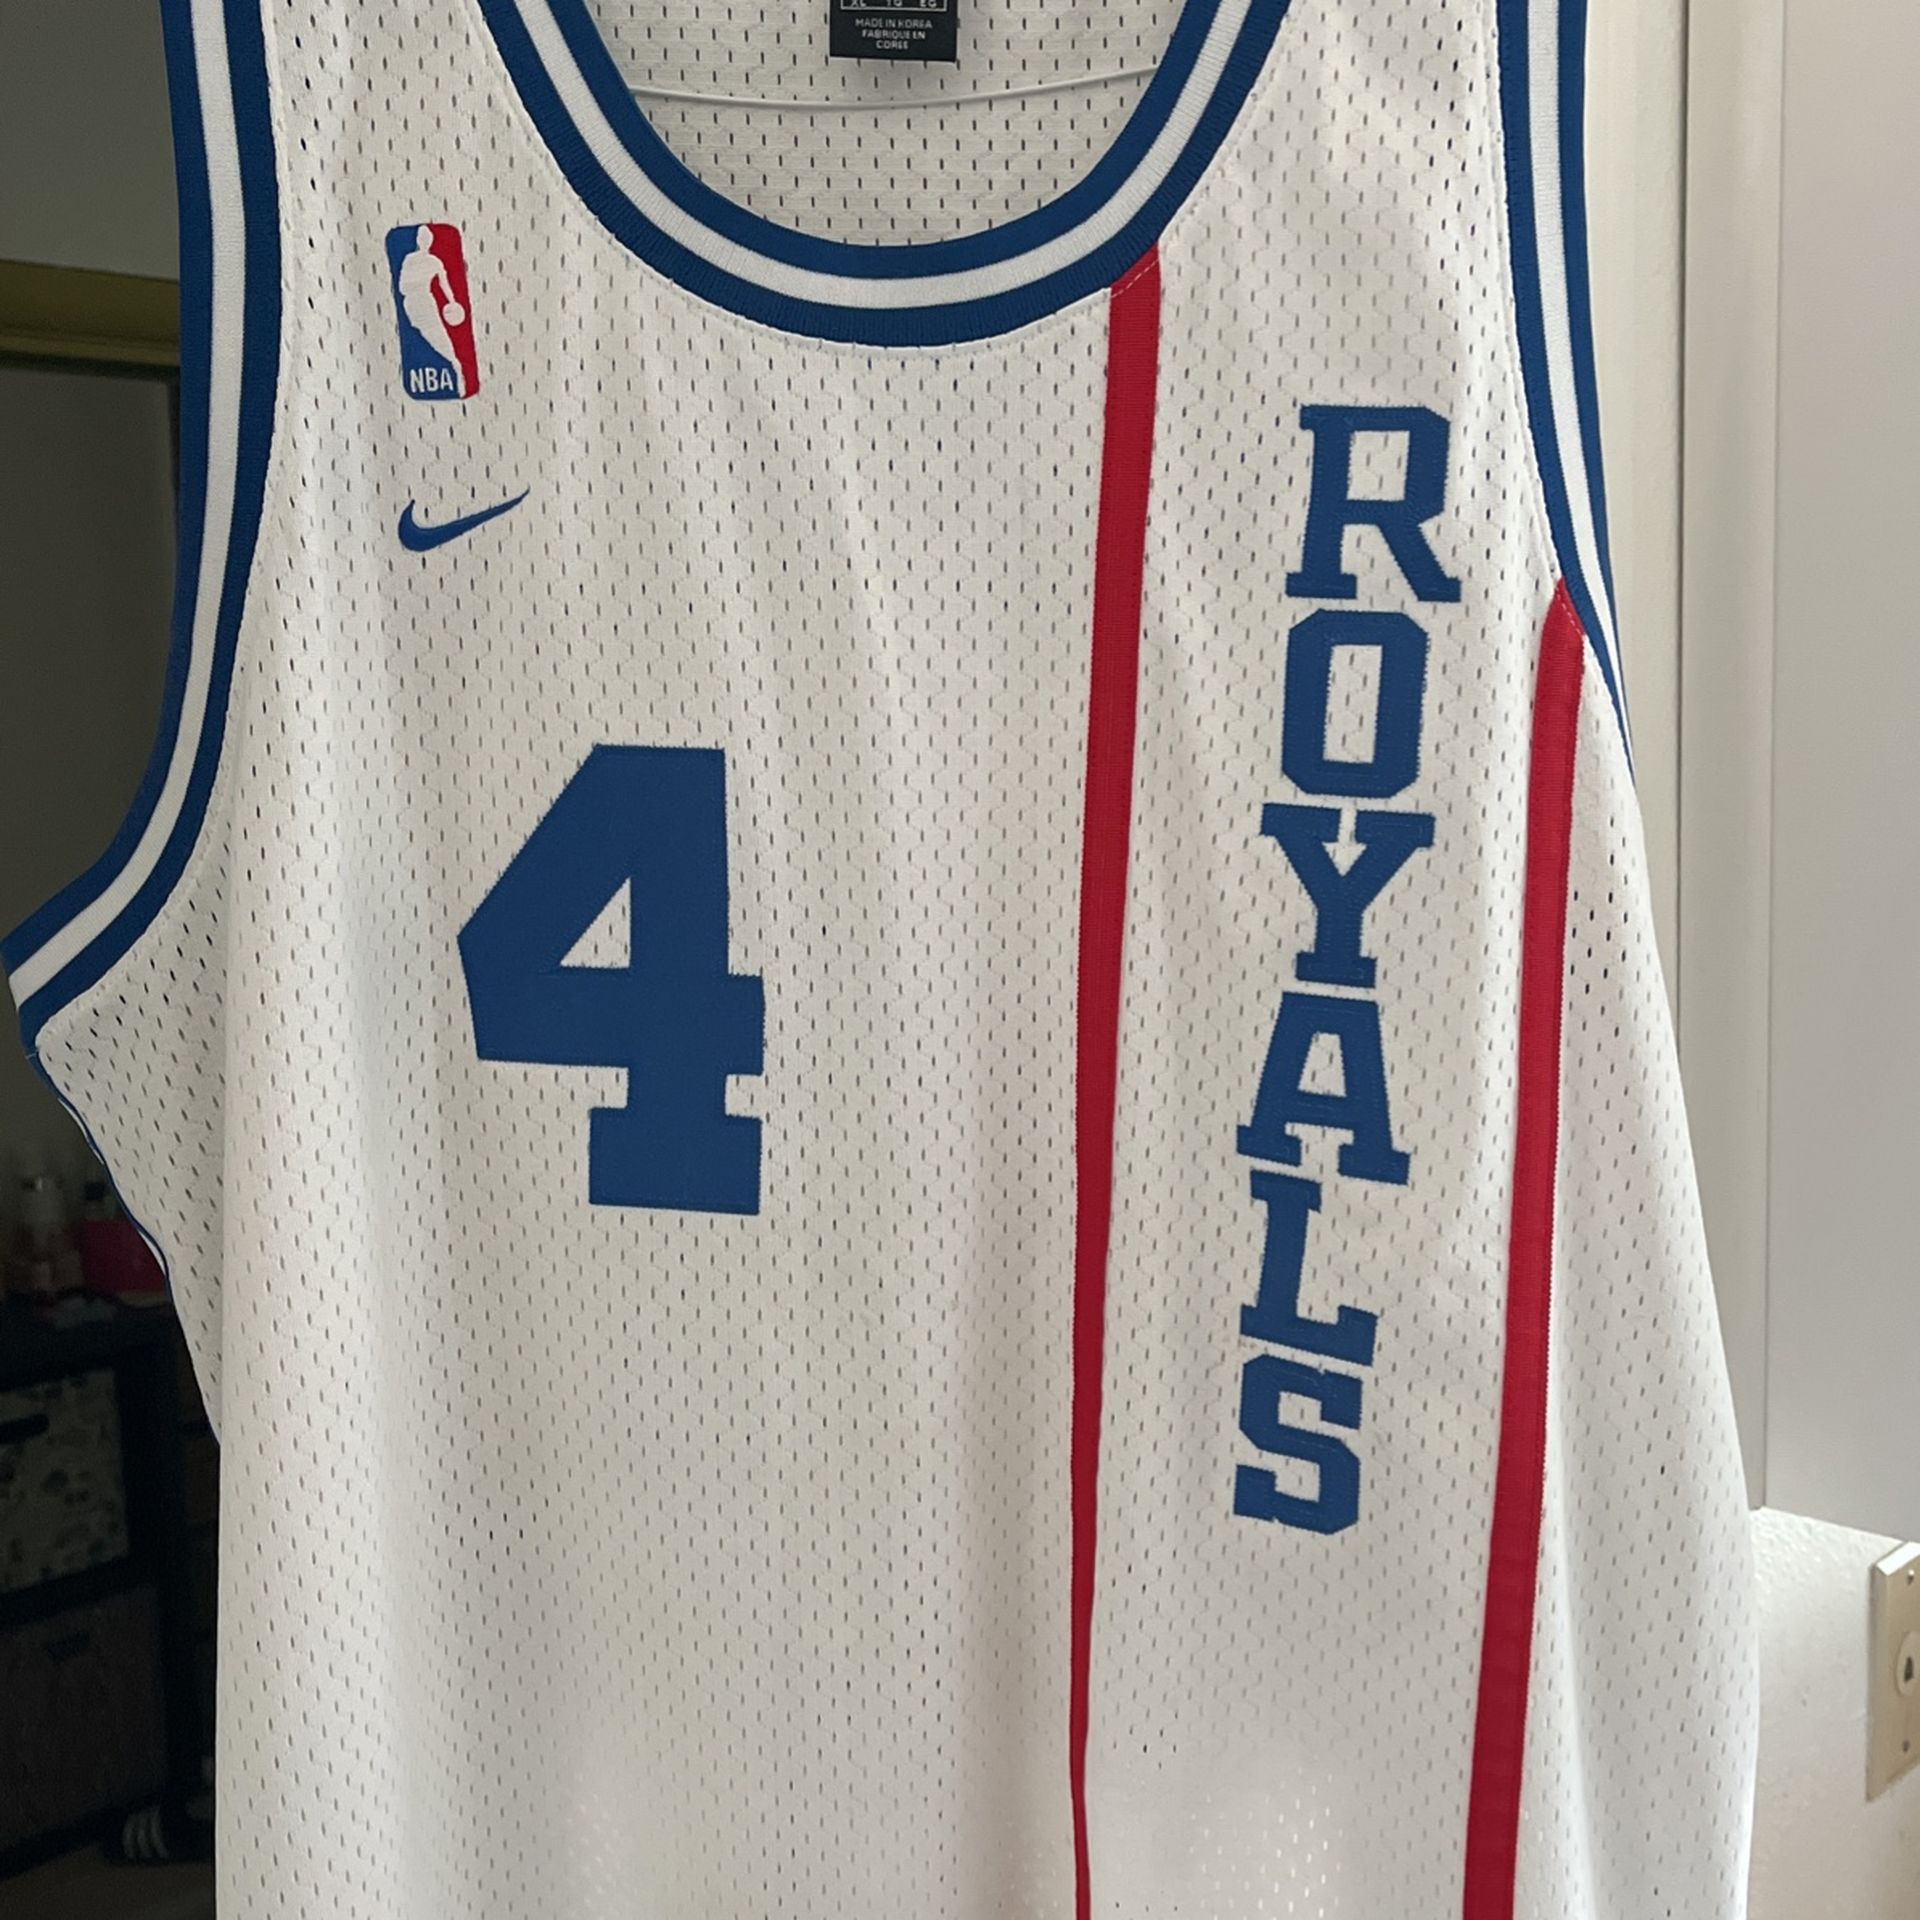 Sacramento Kings Vintage Chris Webber Nike Basketball Jersey 